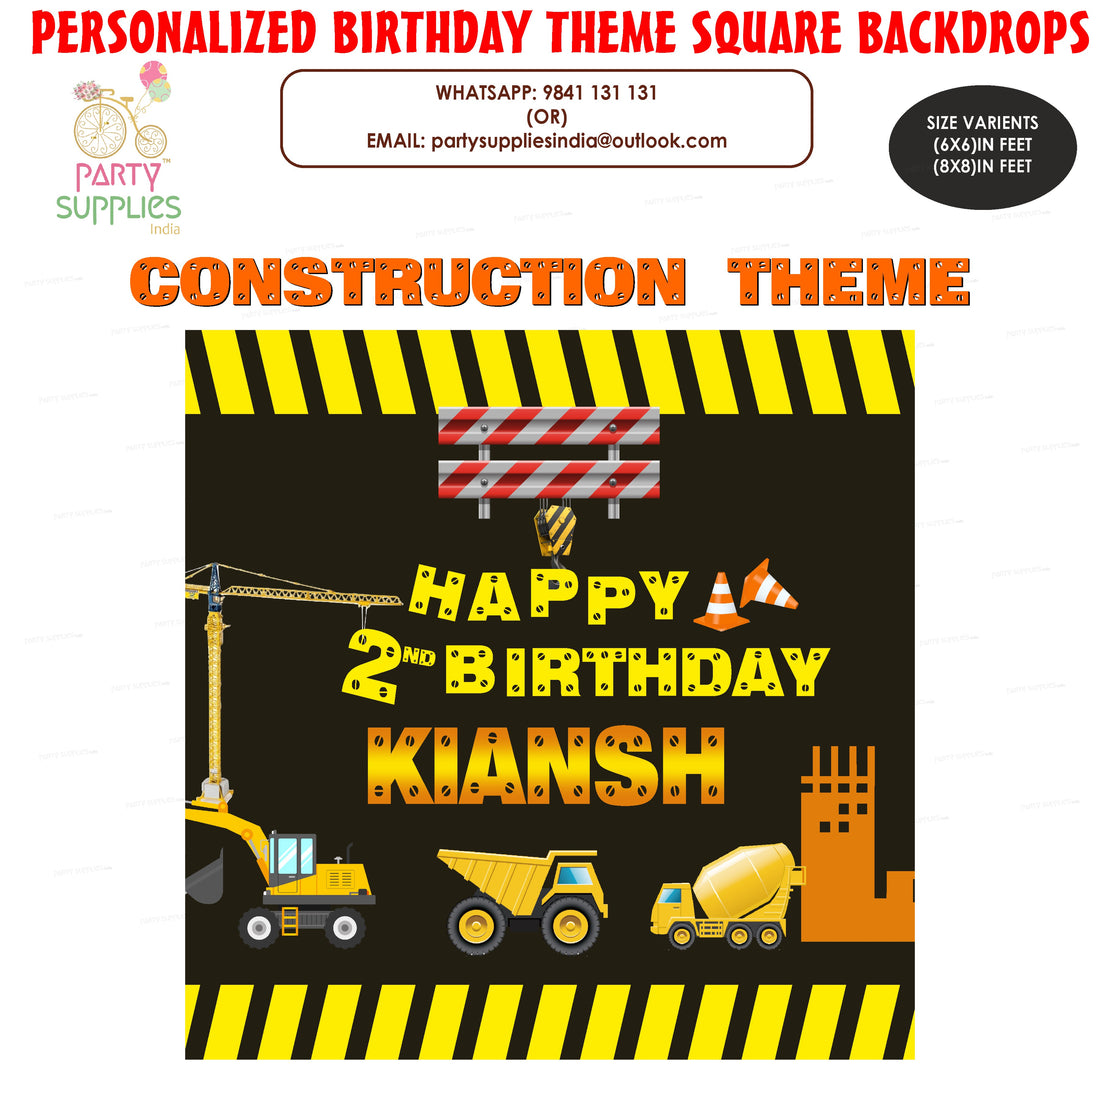 PSI Construction Theme  Customized  Square Backdrop